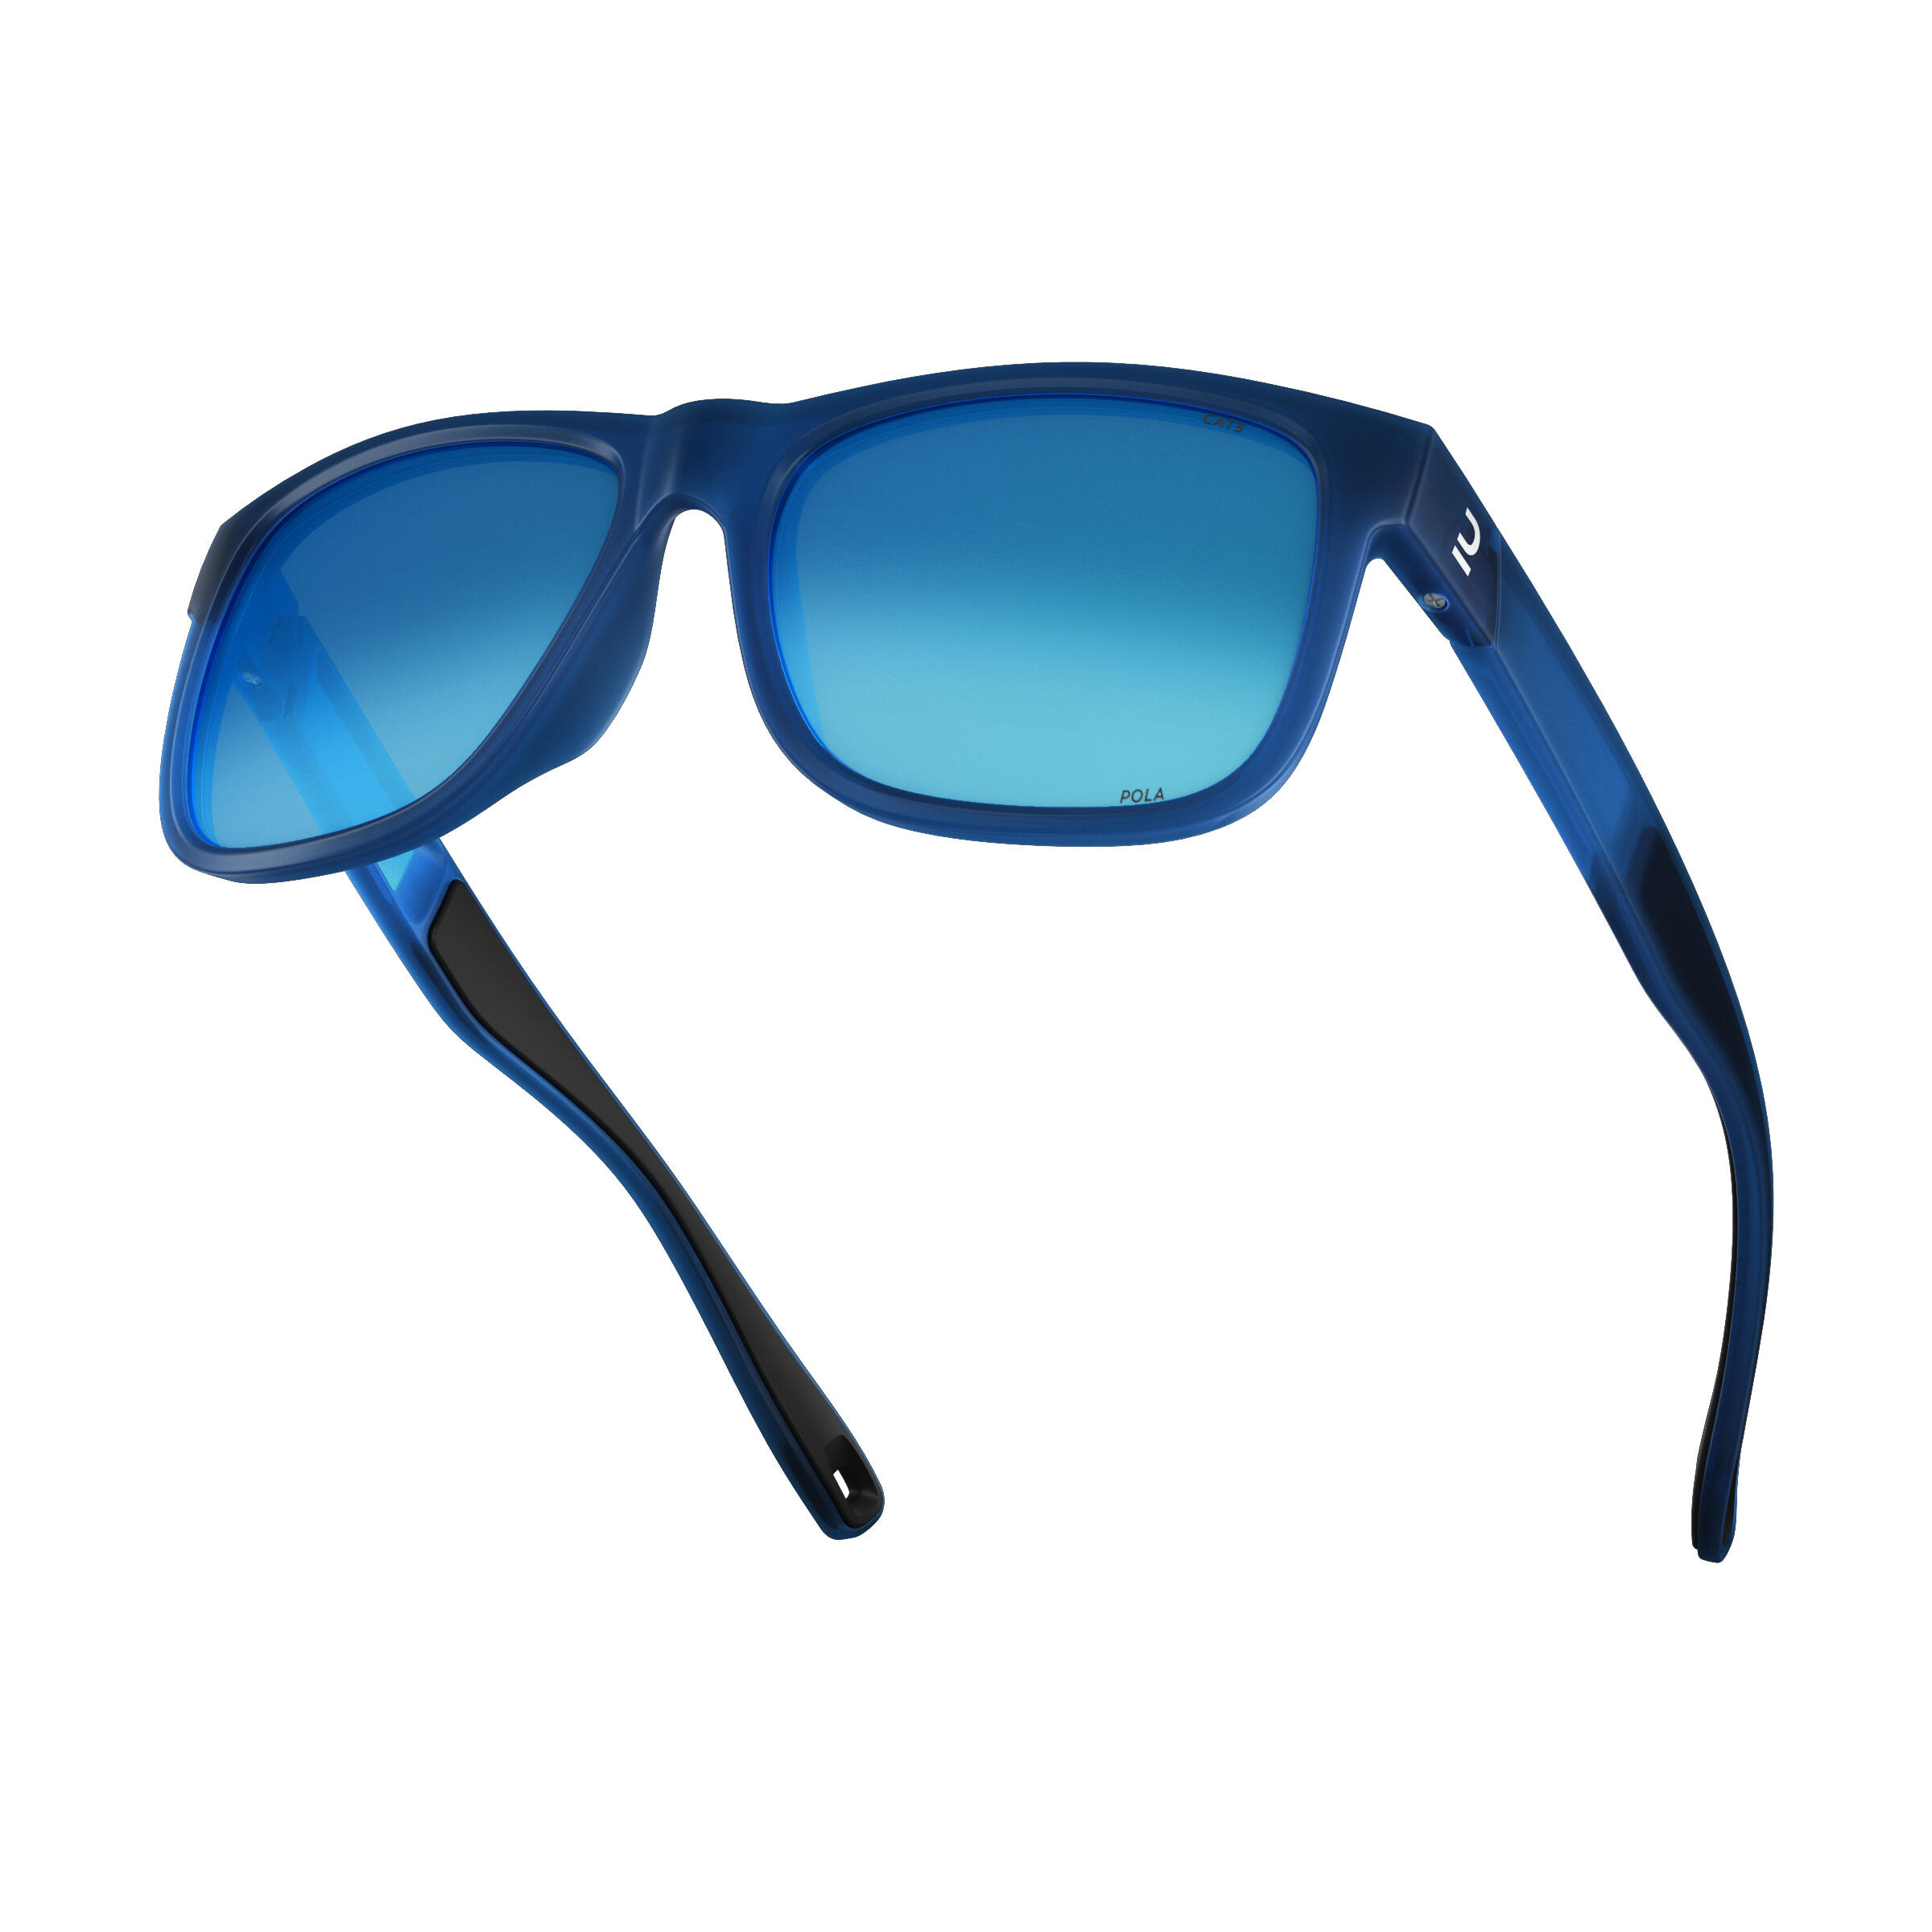 MH 140 category 3 hiking sunglasses - Adults - QUECHUA